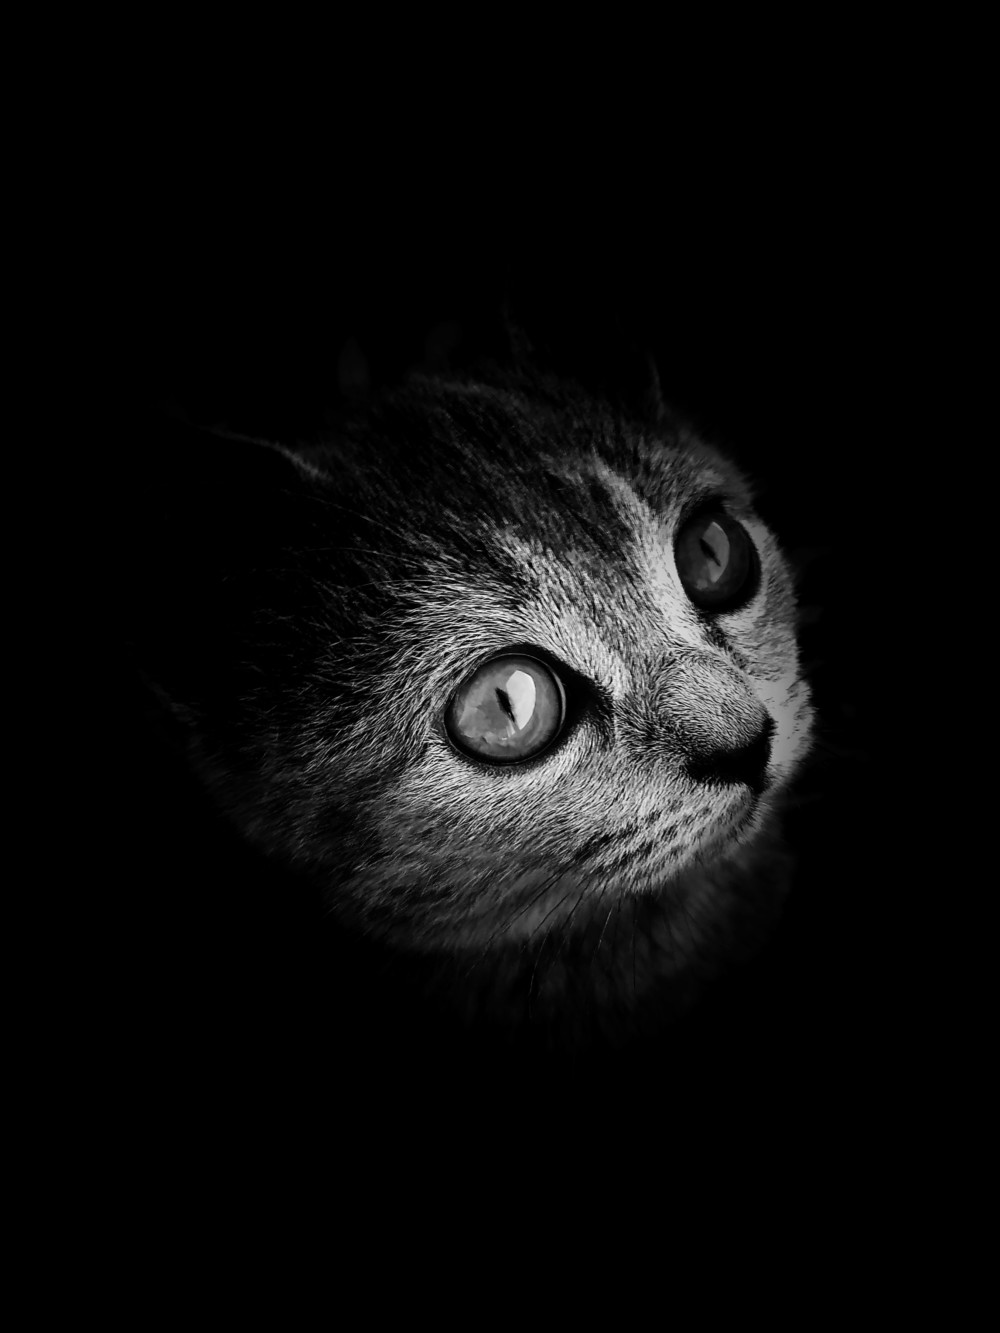 Черно-белое фото в Snapseed